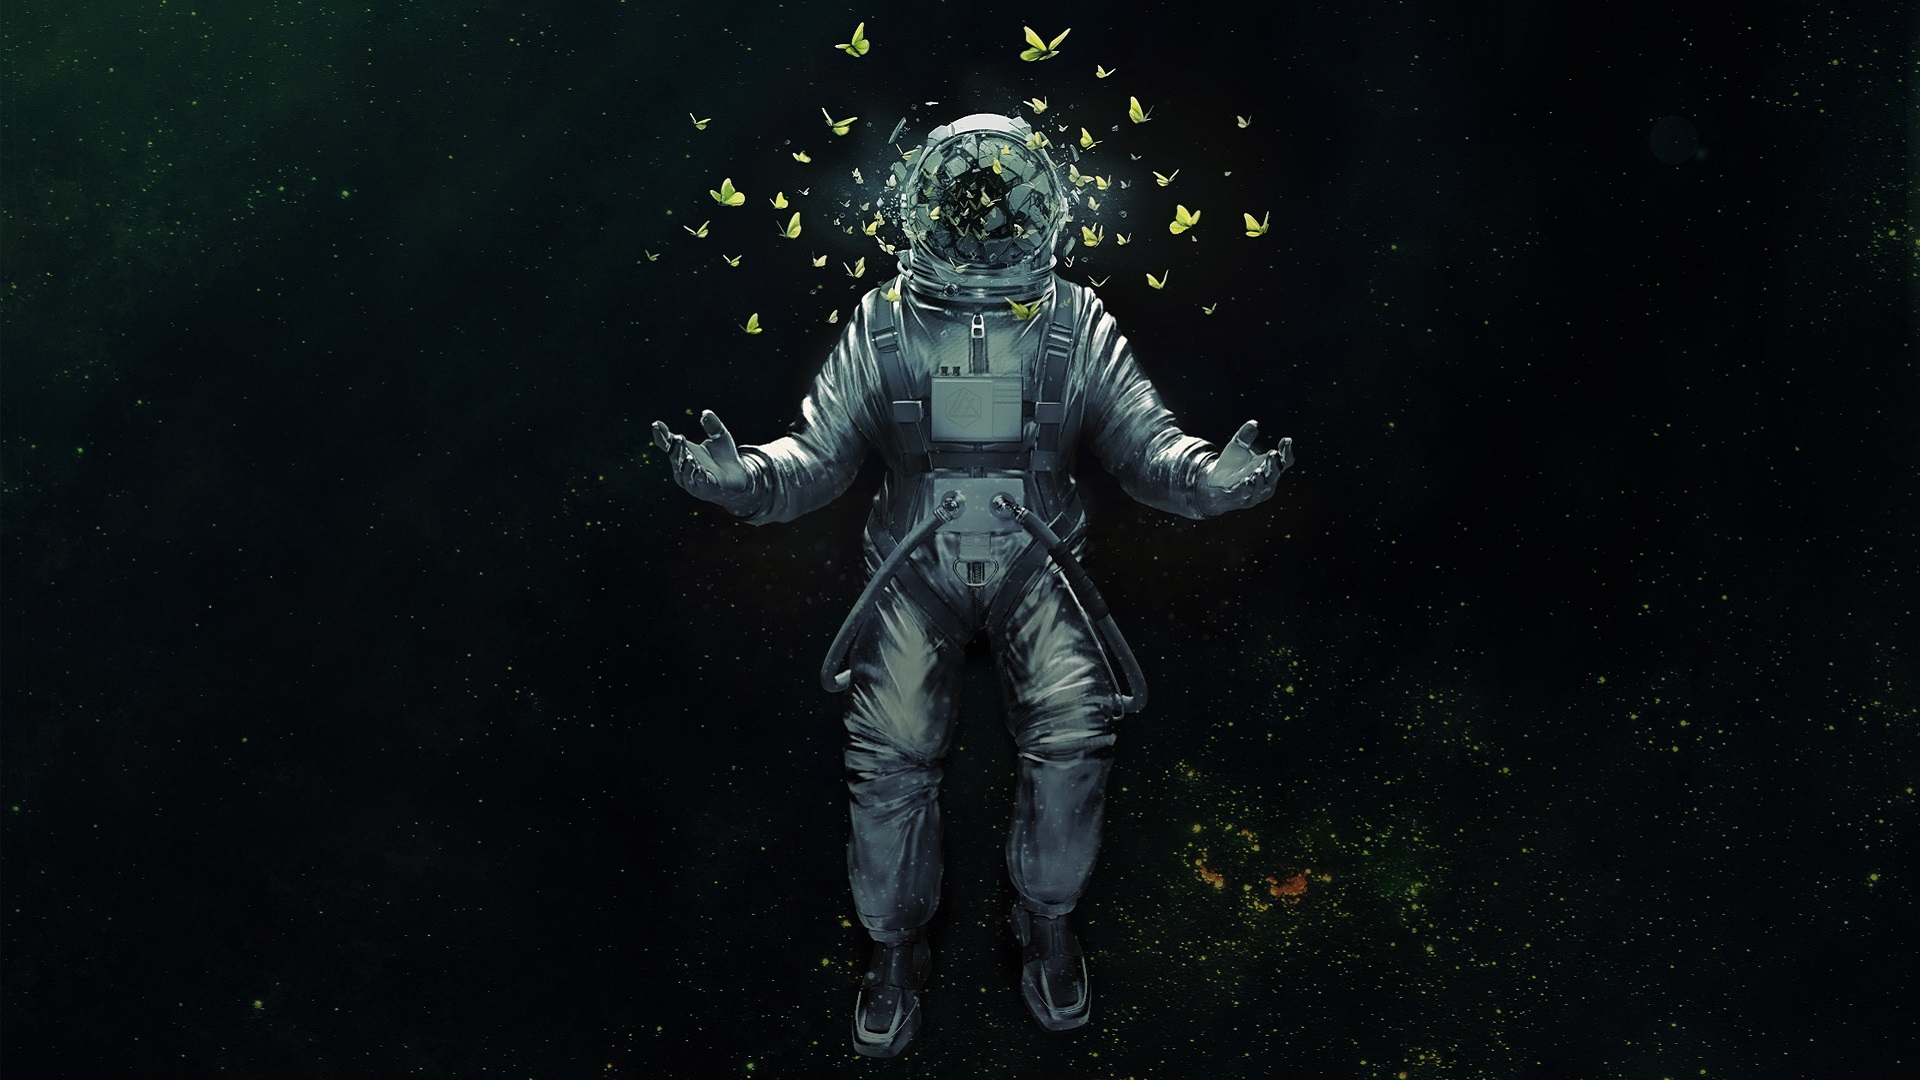 Wallpapers astronaut science fiction artist on the desktop